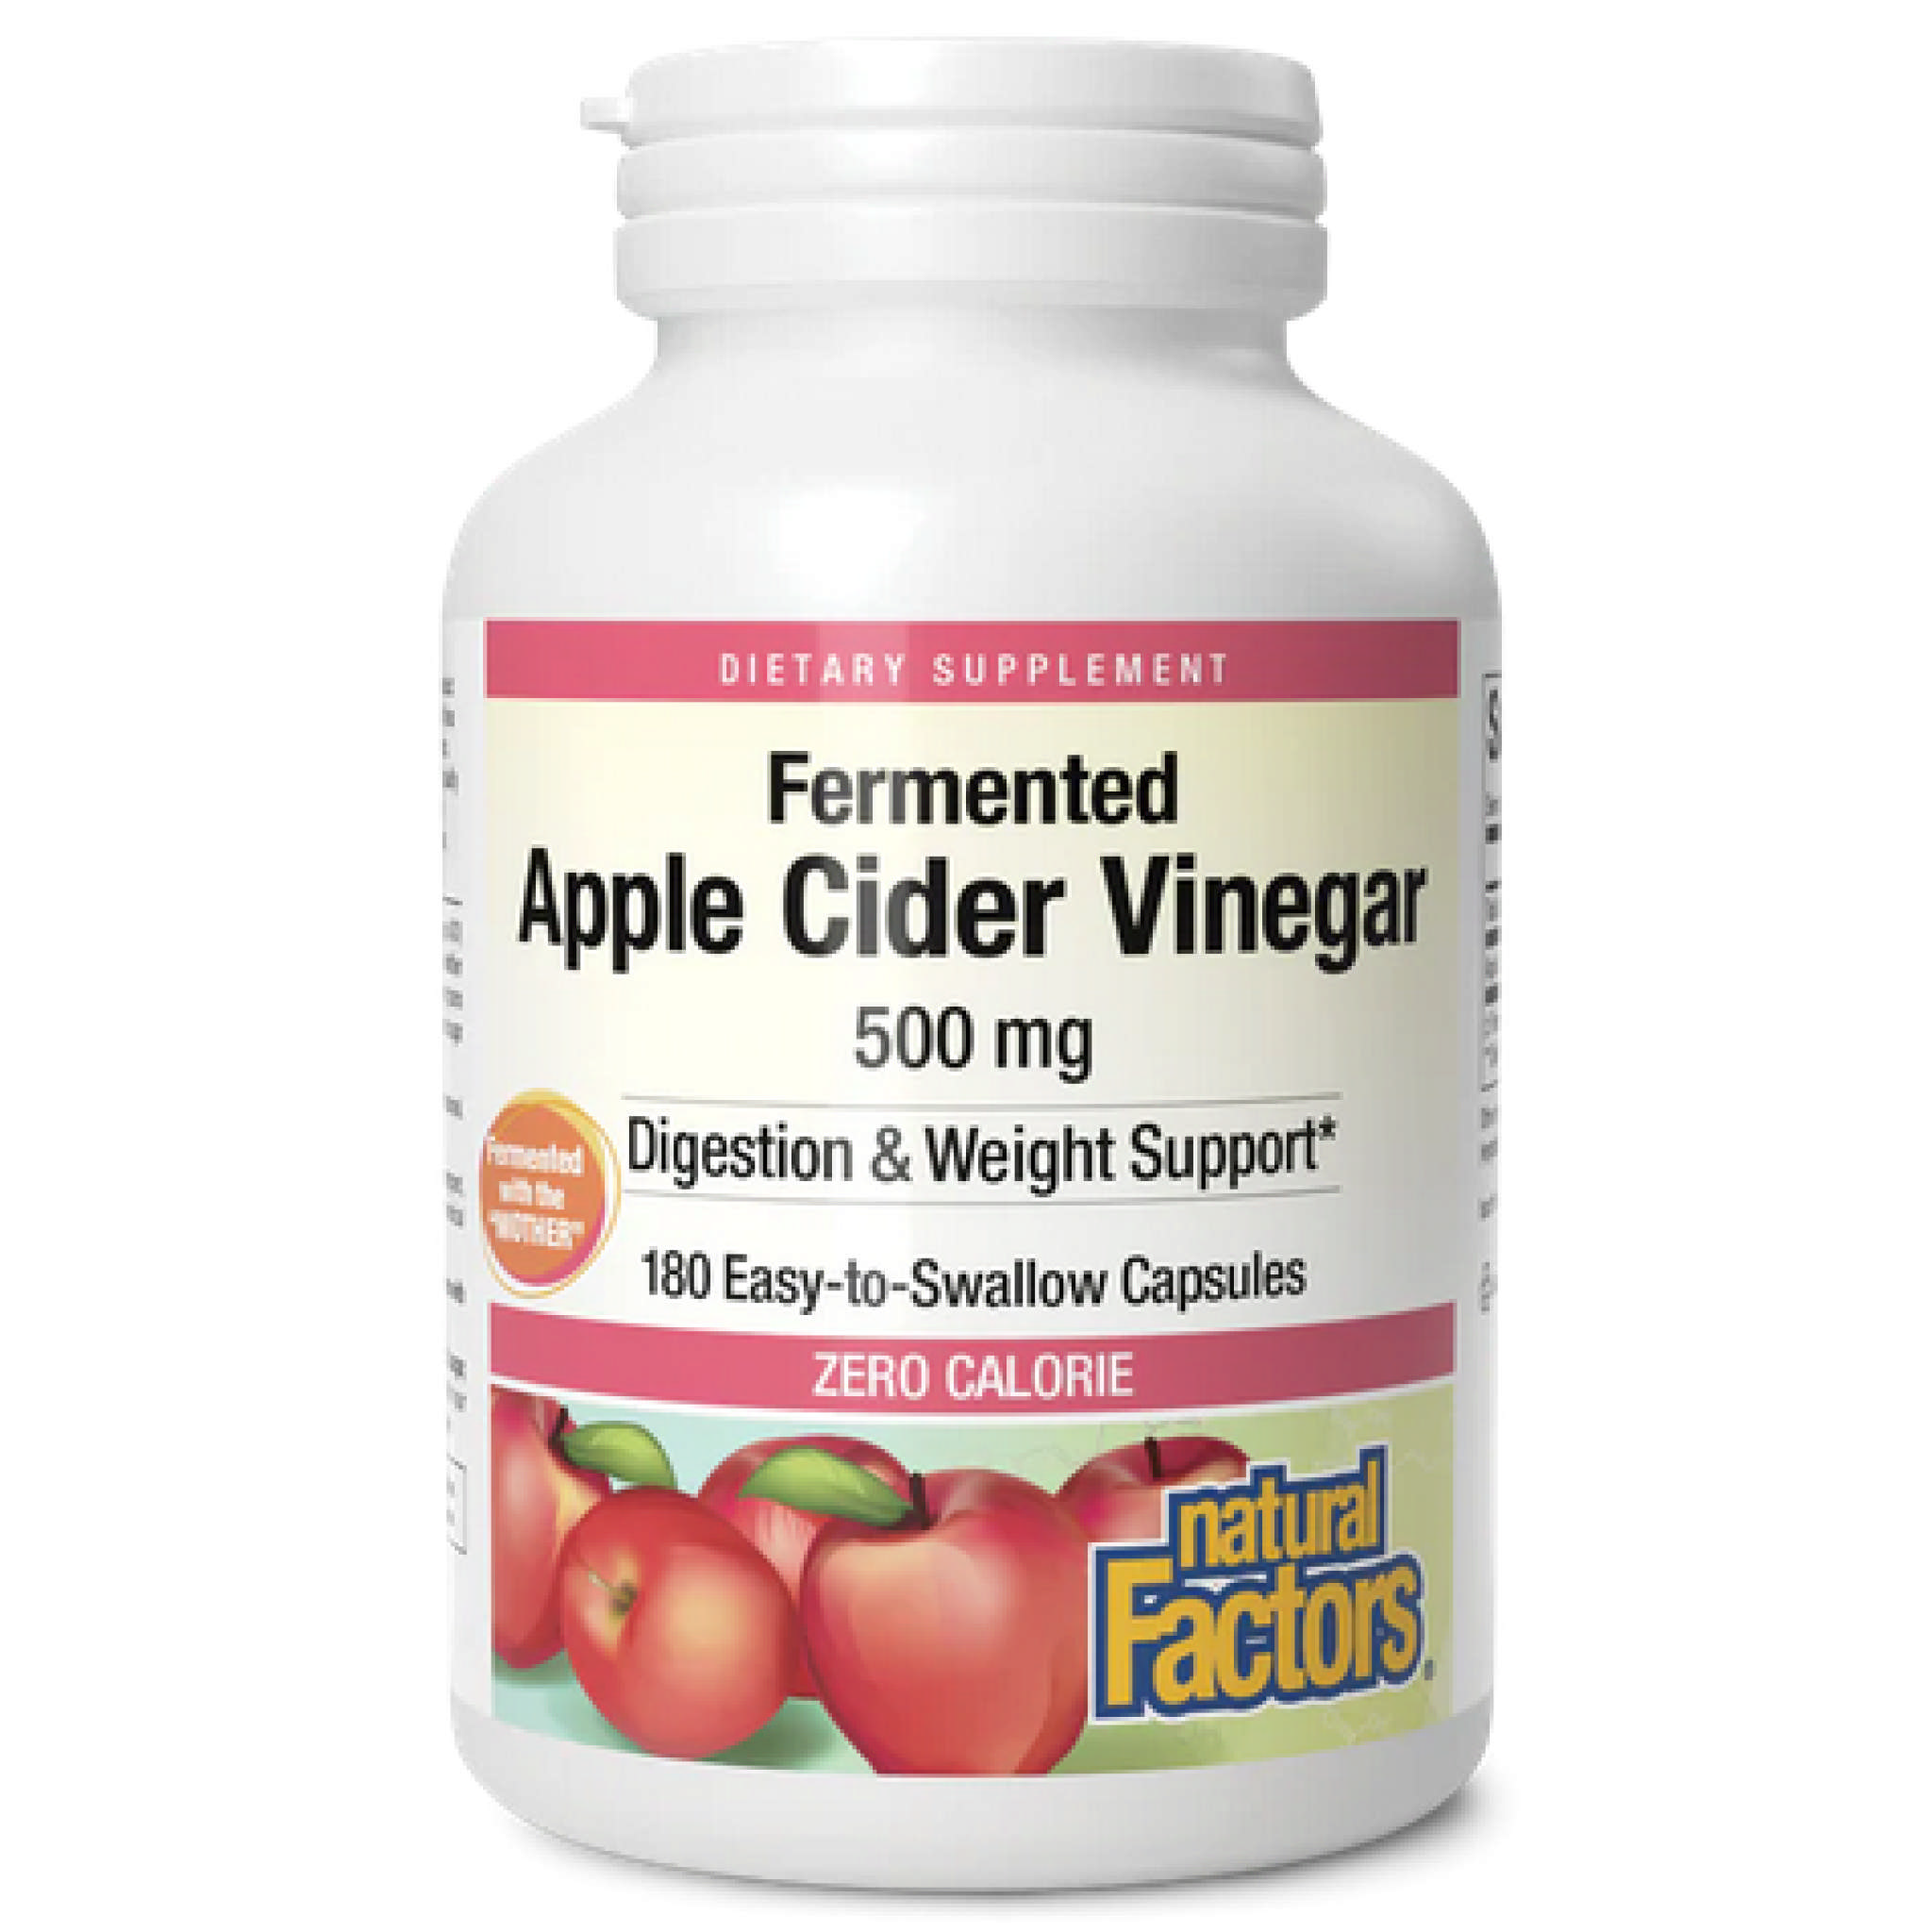 Natural Factors - Apple Cider Vinegar 500 mg